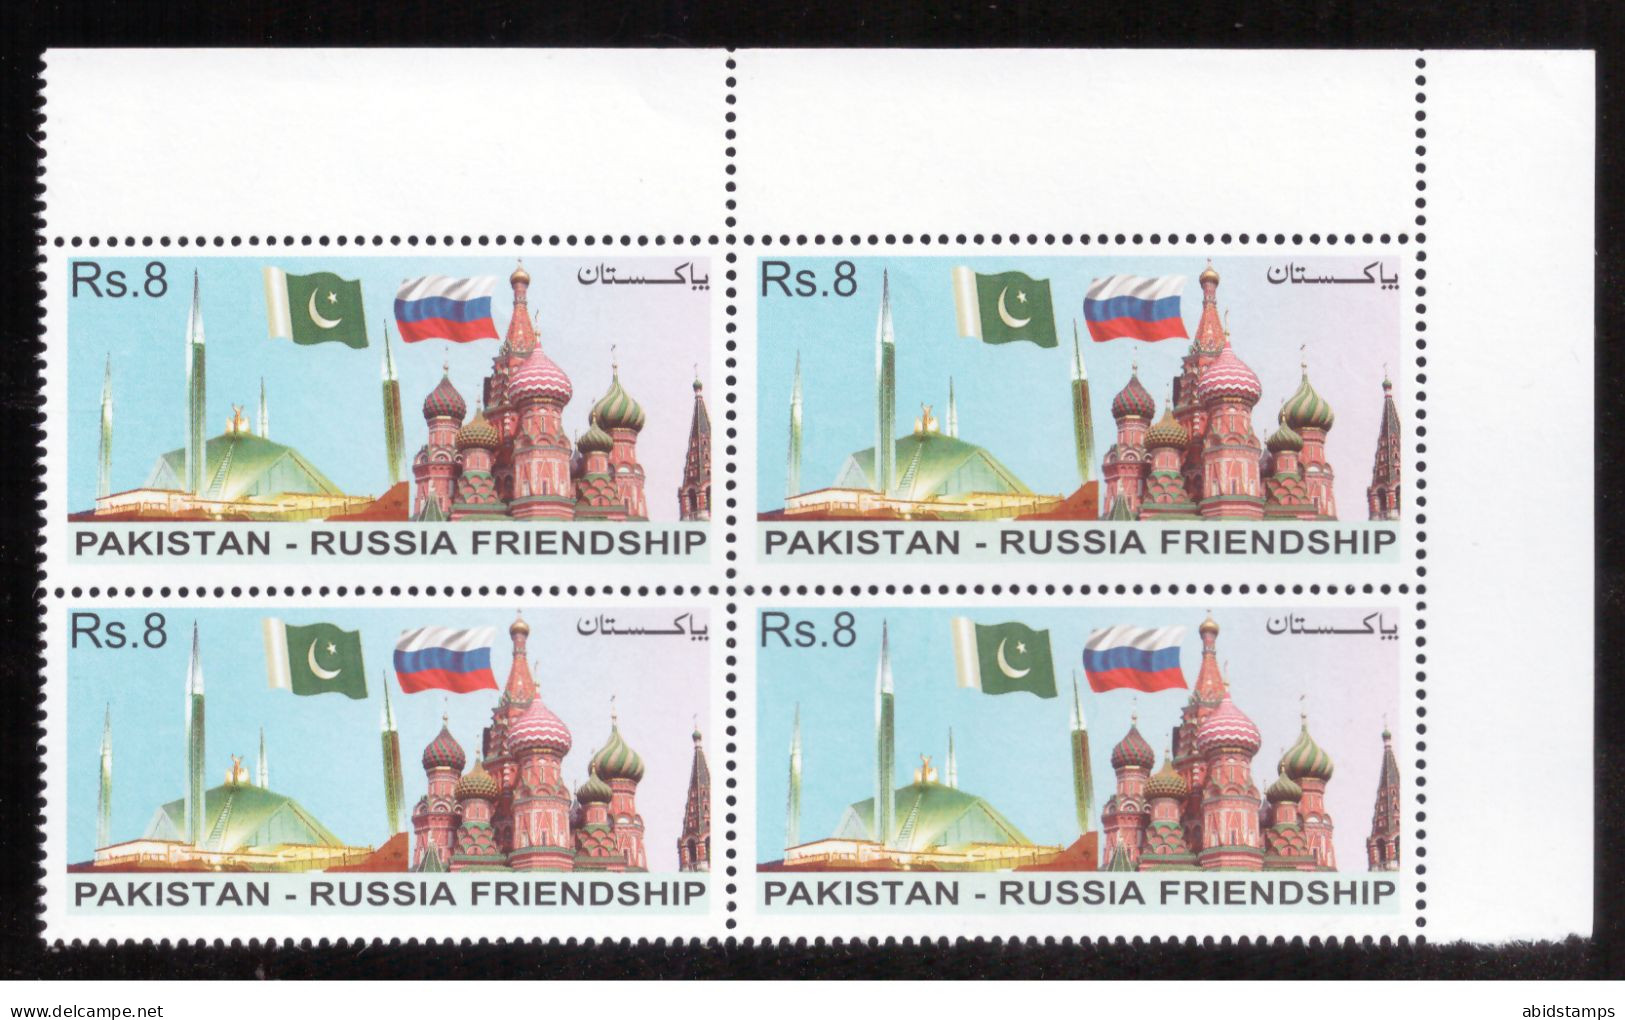 PAKISTAN STAMPS 2011 PAKISTAN RUSSIA FRIENDSHIP BLOCK OF FOUR  MNH - Pakistan